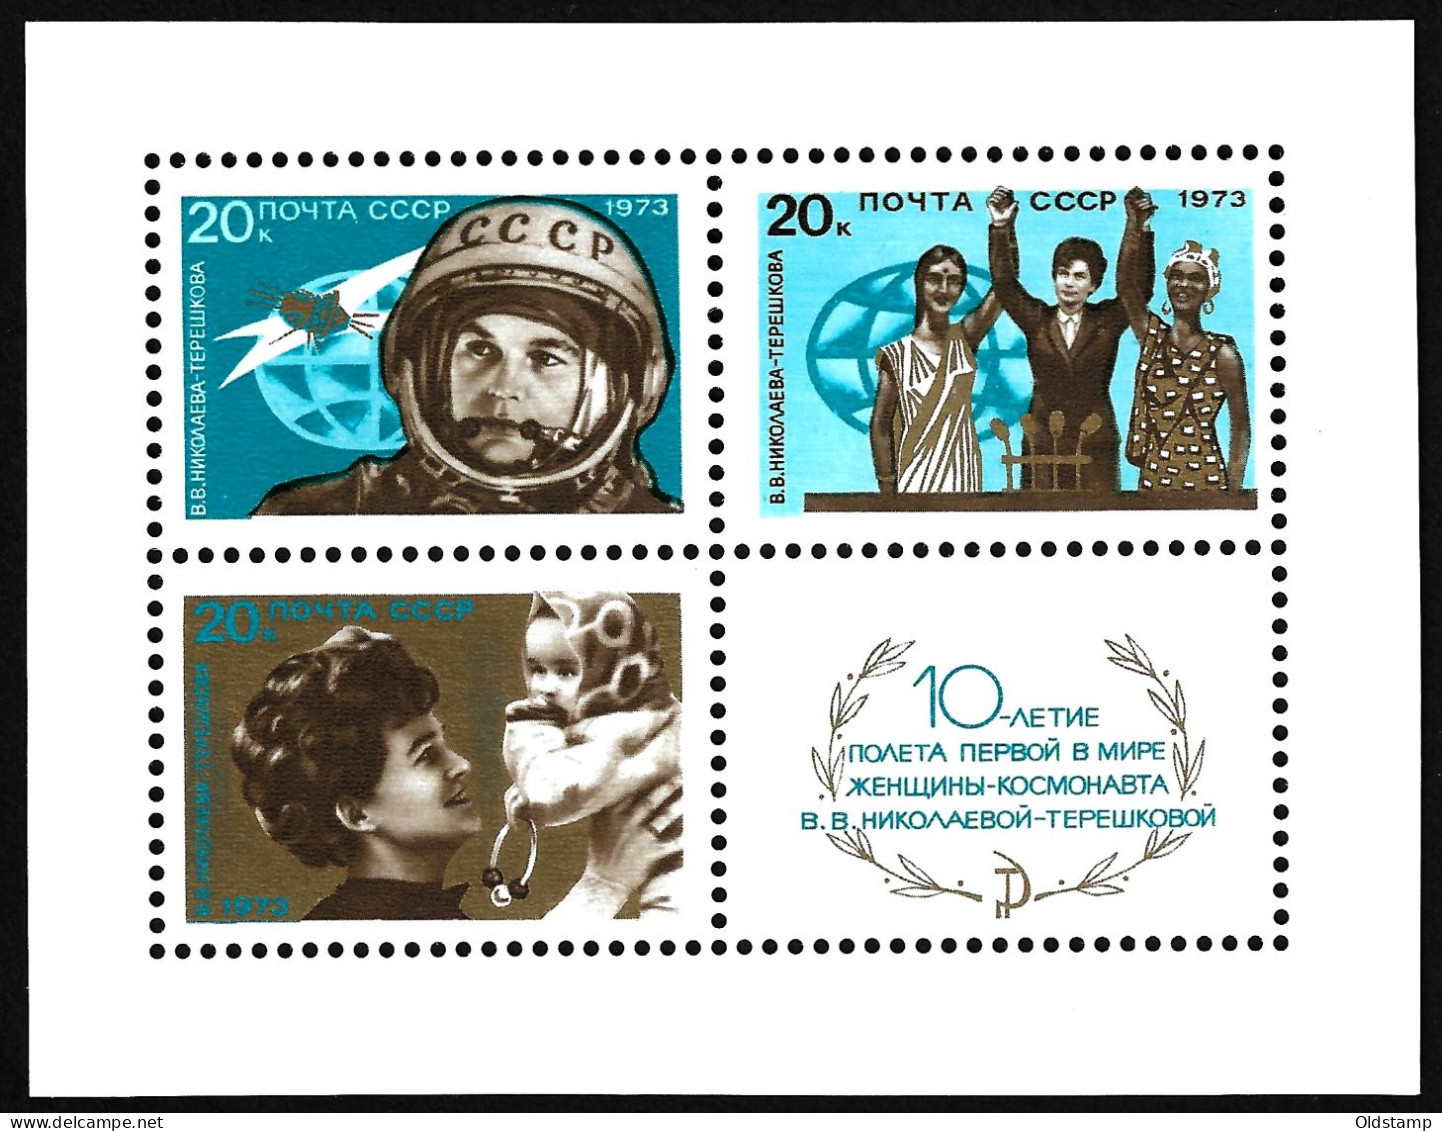 SPACE USSR 1973 MNH GAGARIN Soviet Union 20k. Space Gagarin 10th Flight Tereshkova MNH Stamp Mi. Block # - Collezioni